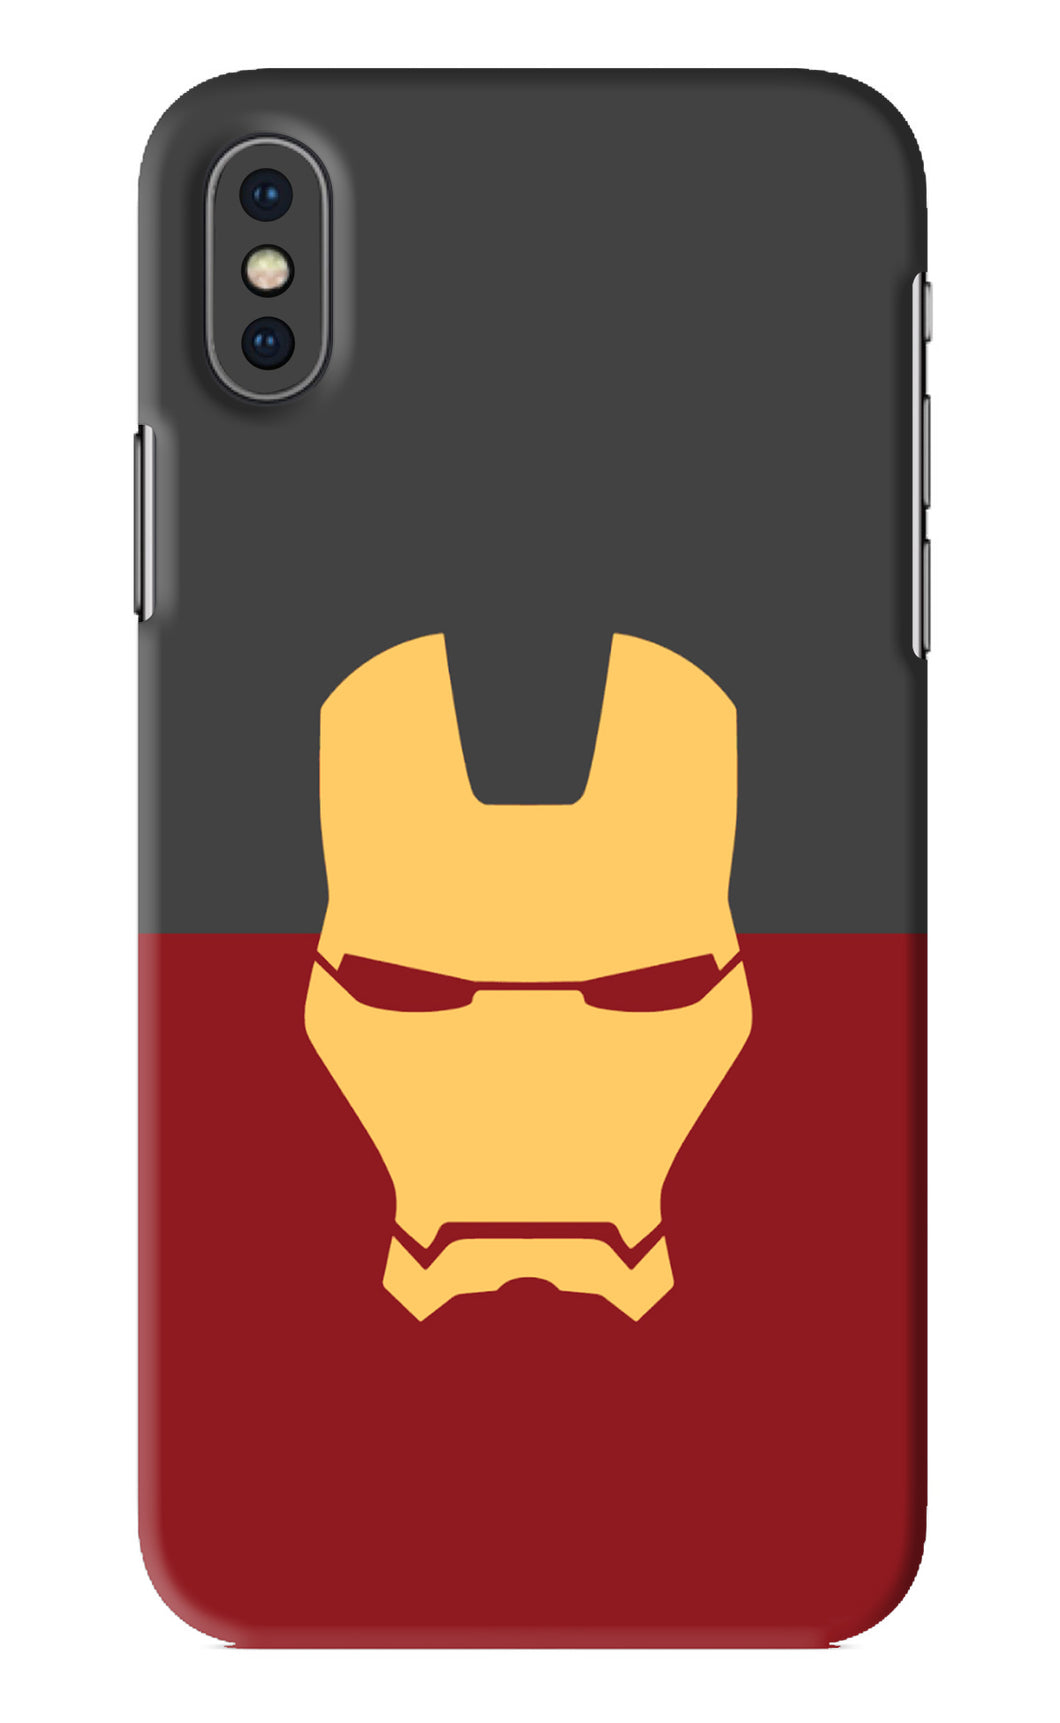 Ironman iPhone XS Back Skin Wrap